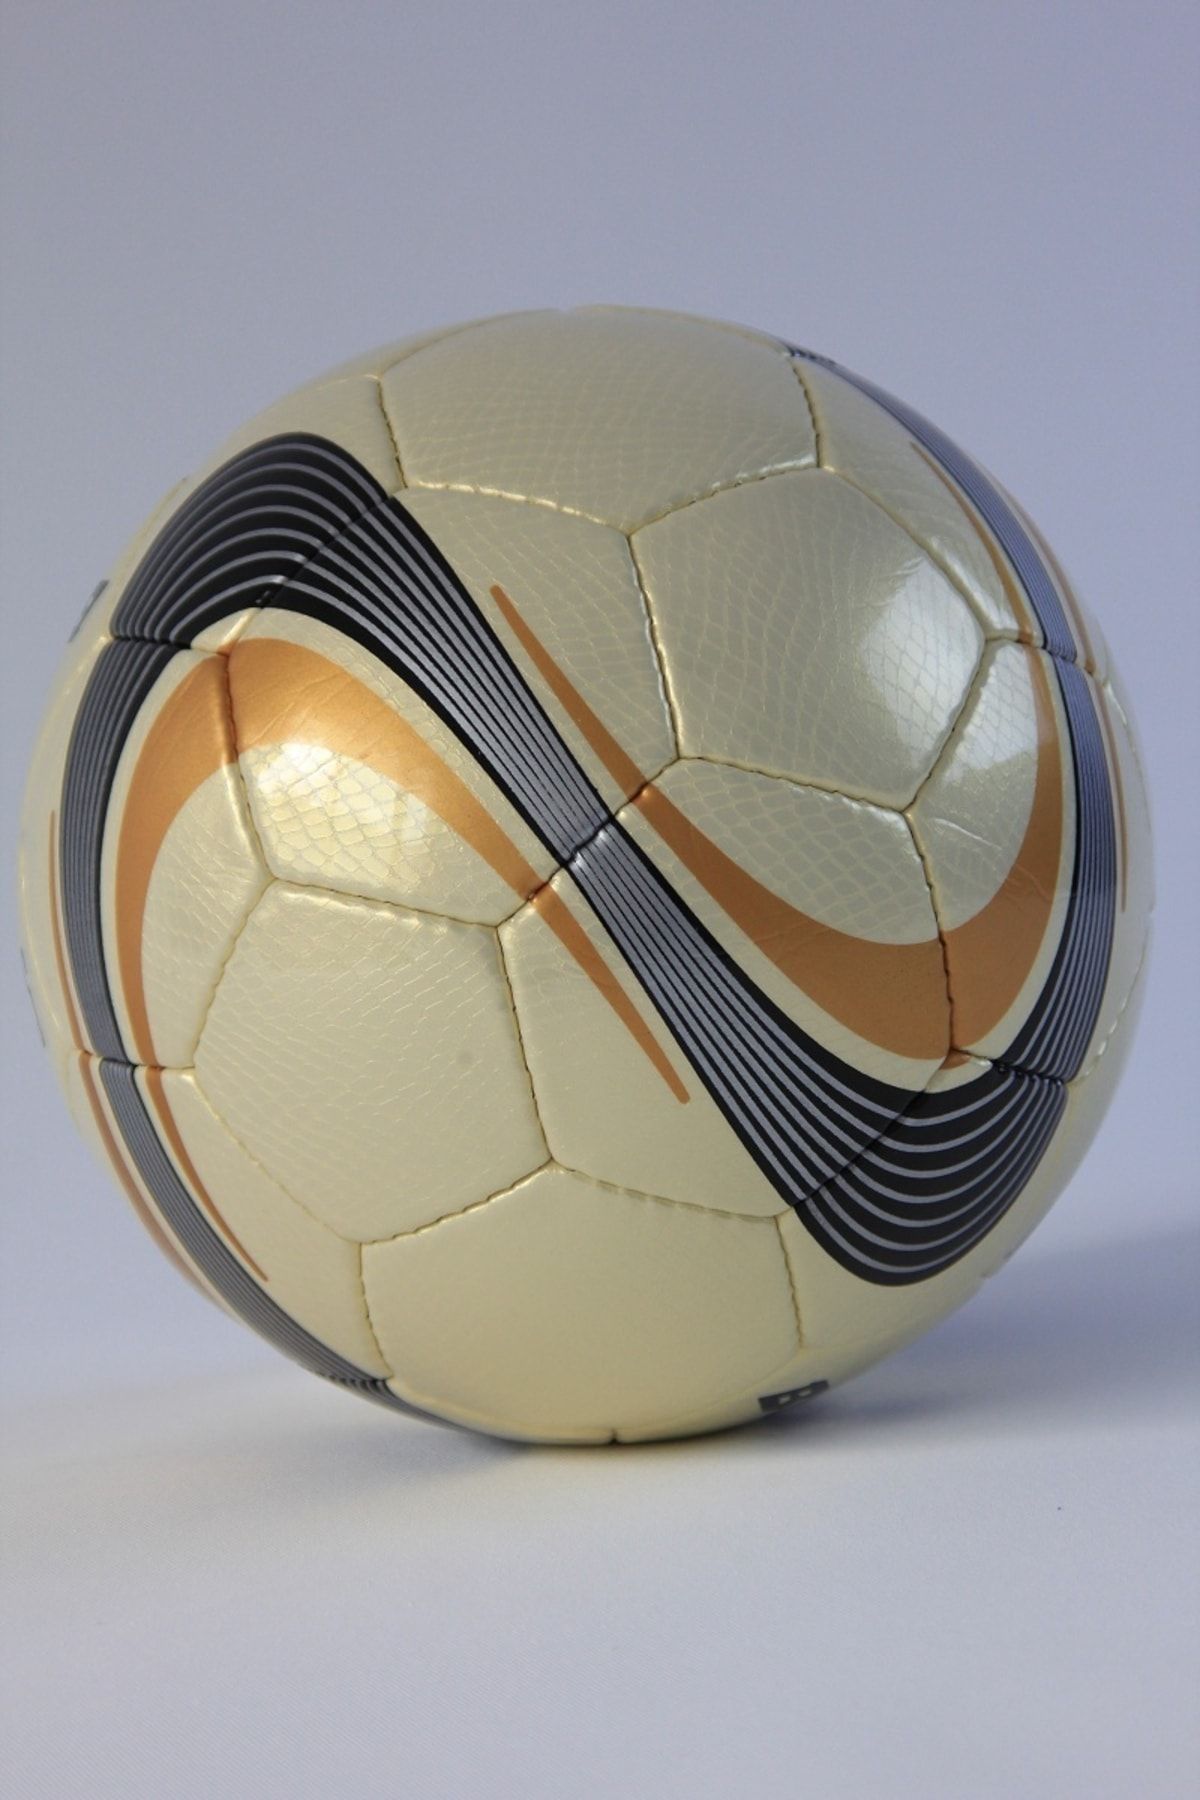 mAESGO Black Super Futbol Topu Halı Saha Topu El Dikişli Futbol Topu